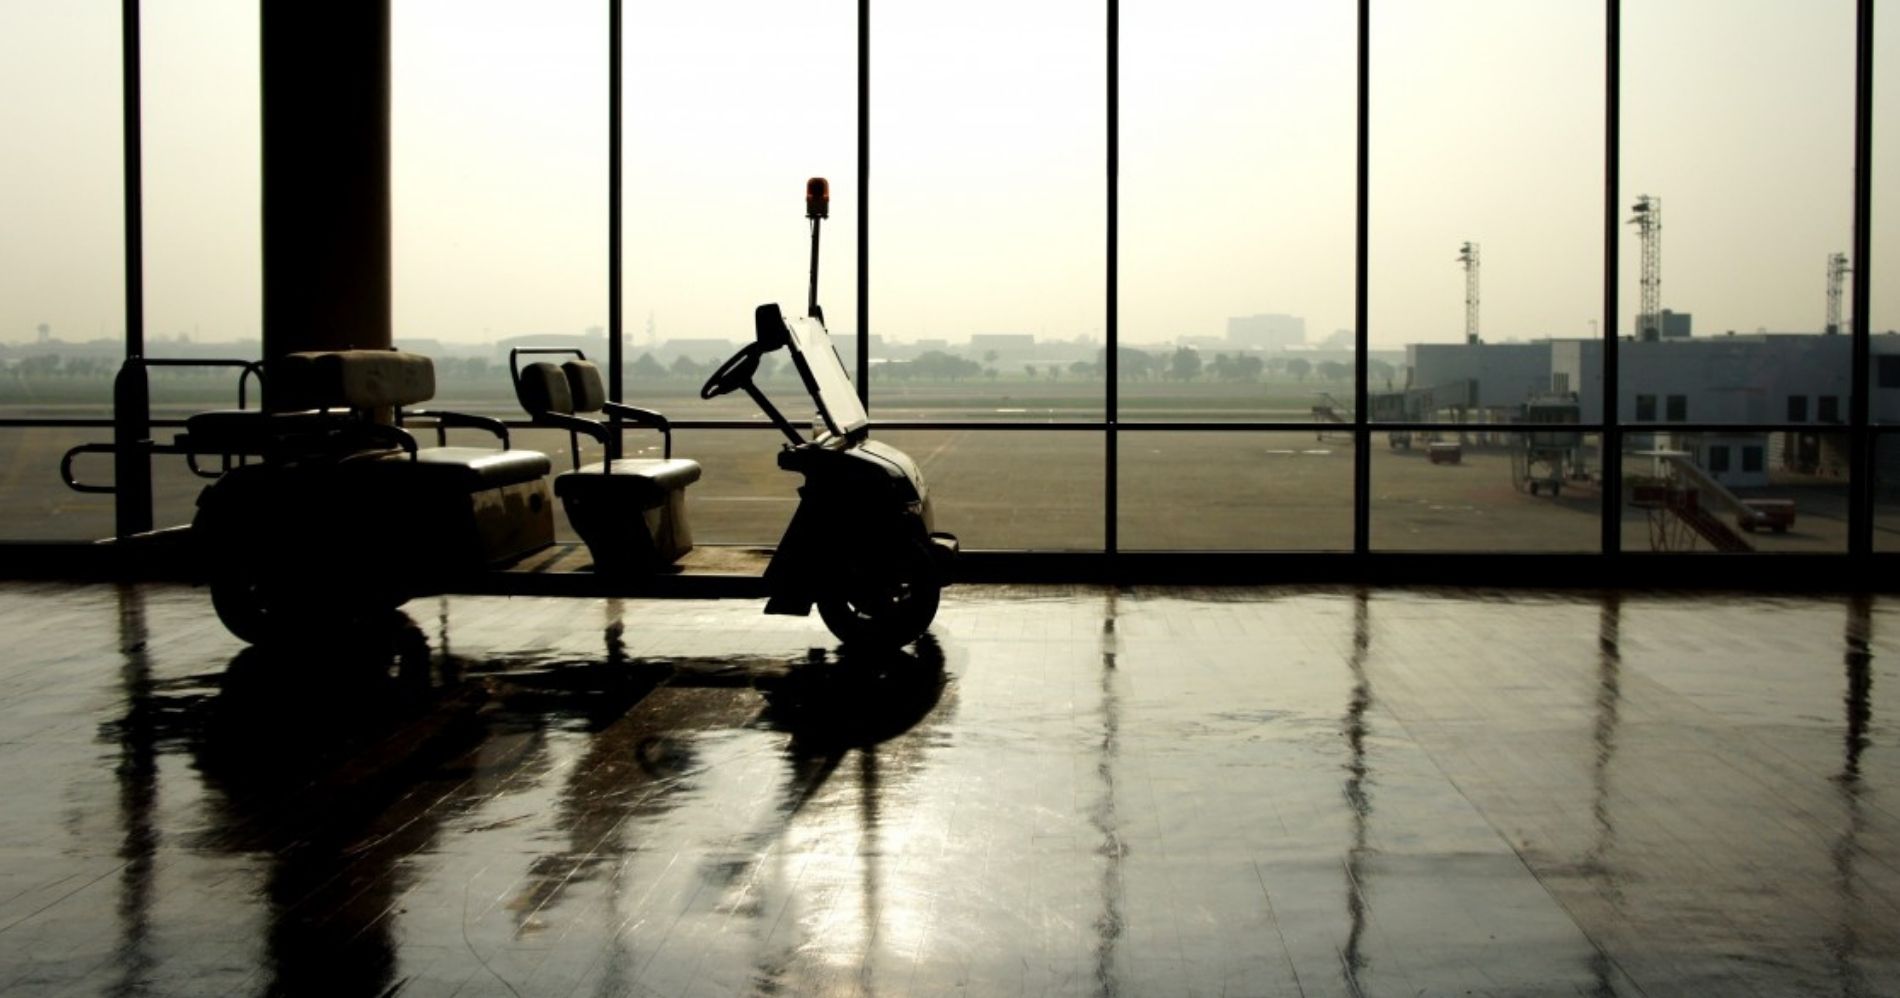 Don Muang Airport - Image: Pxhere